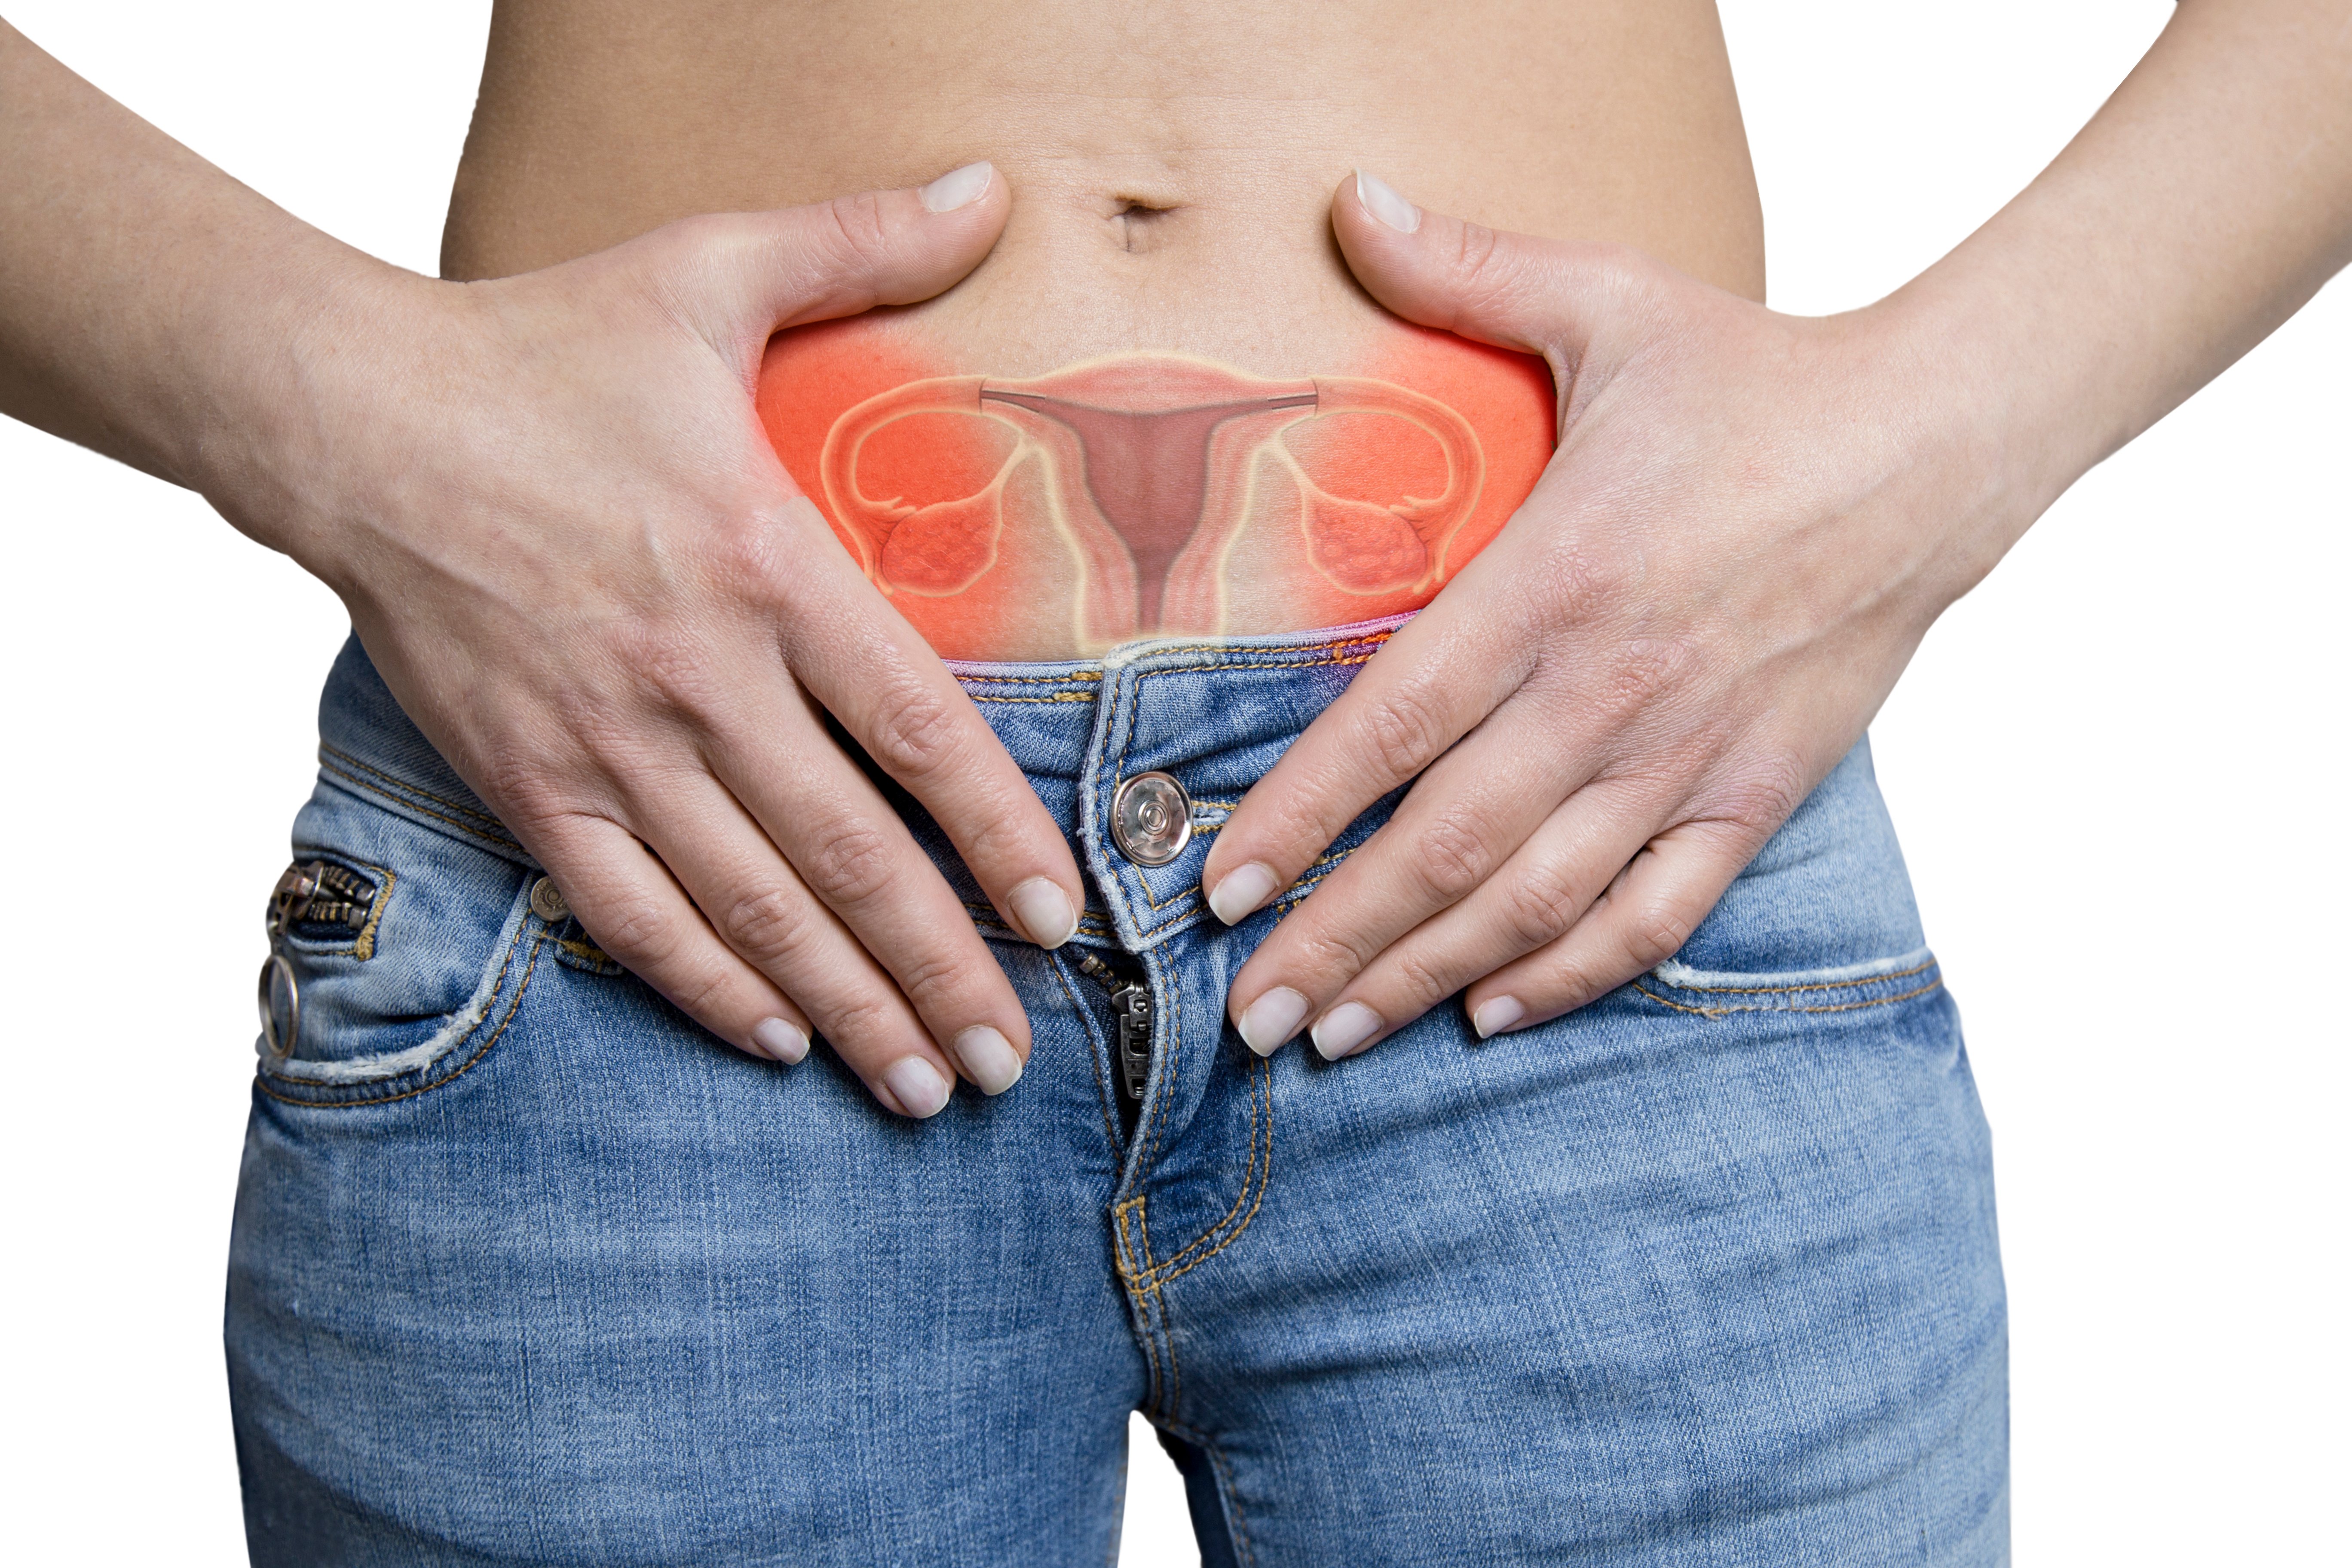 Acute urinary retention due to a nonincarcerated retroverted gravid uterus